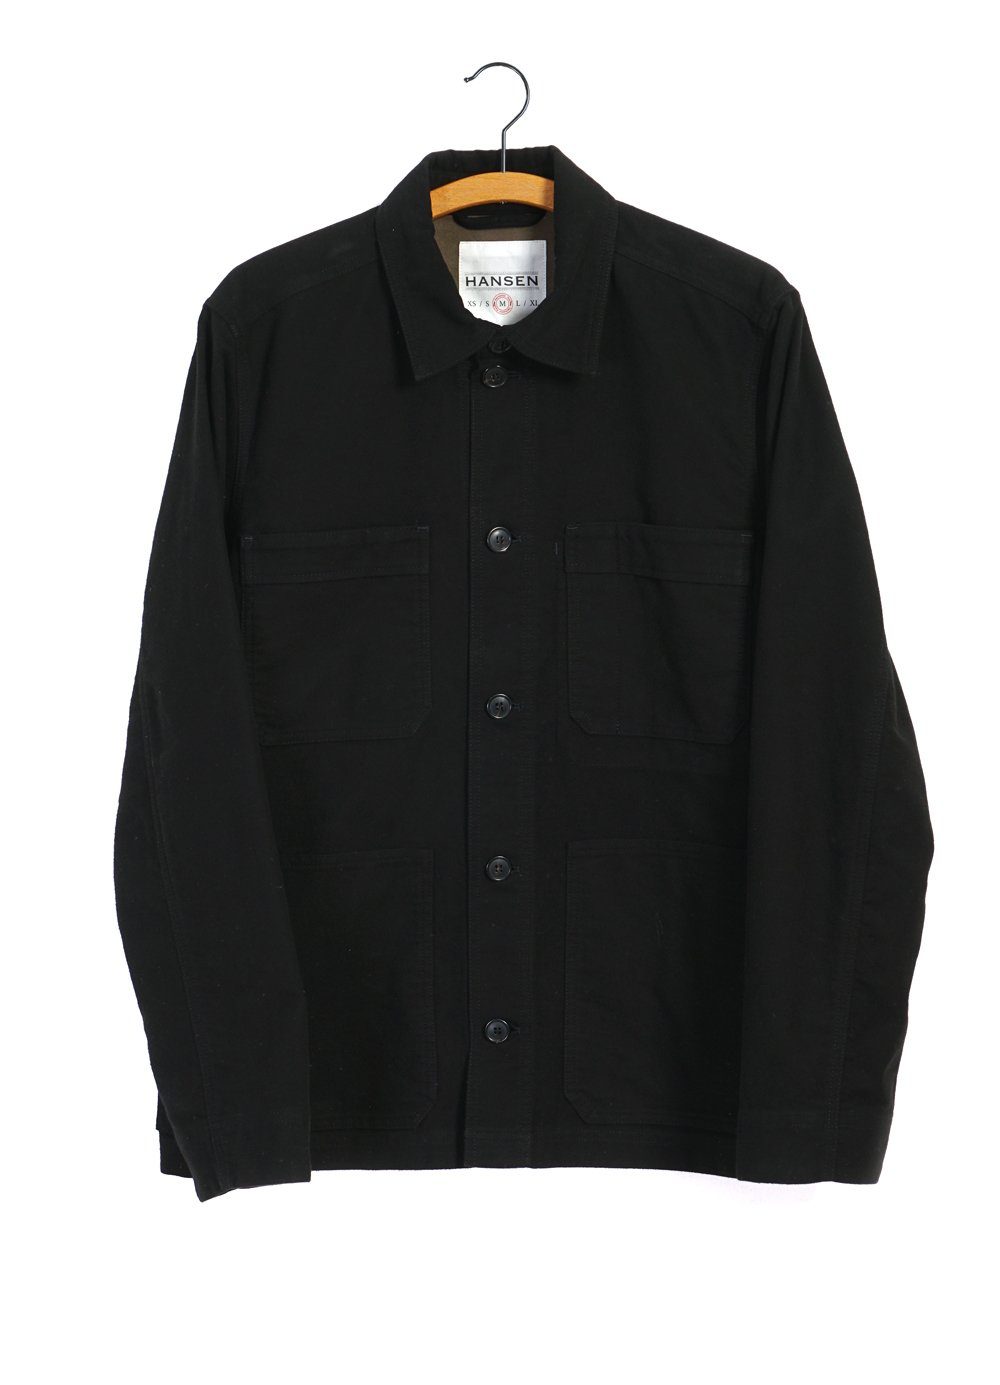 BERTRAM | Refined Work Jacket | Black | HANSEN Garments